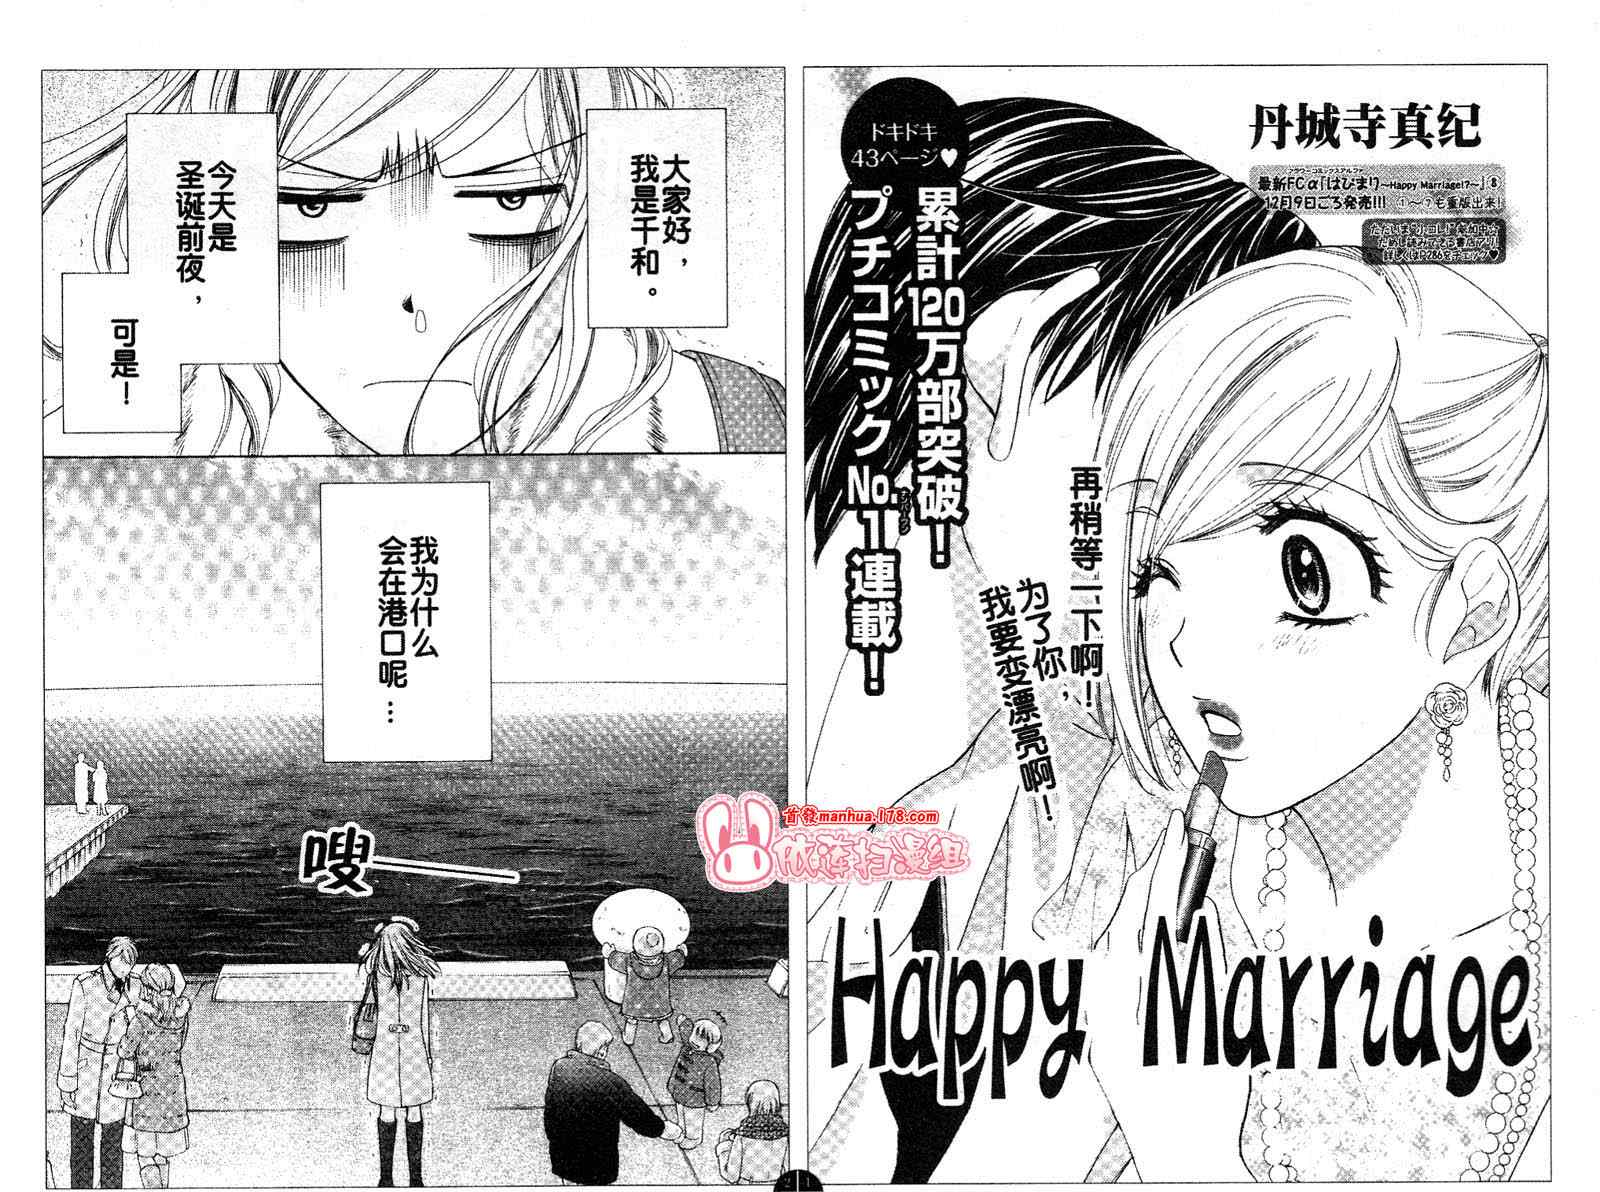 《快乐婚礼》漫画 happy marriage34集